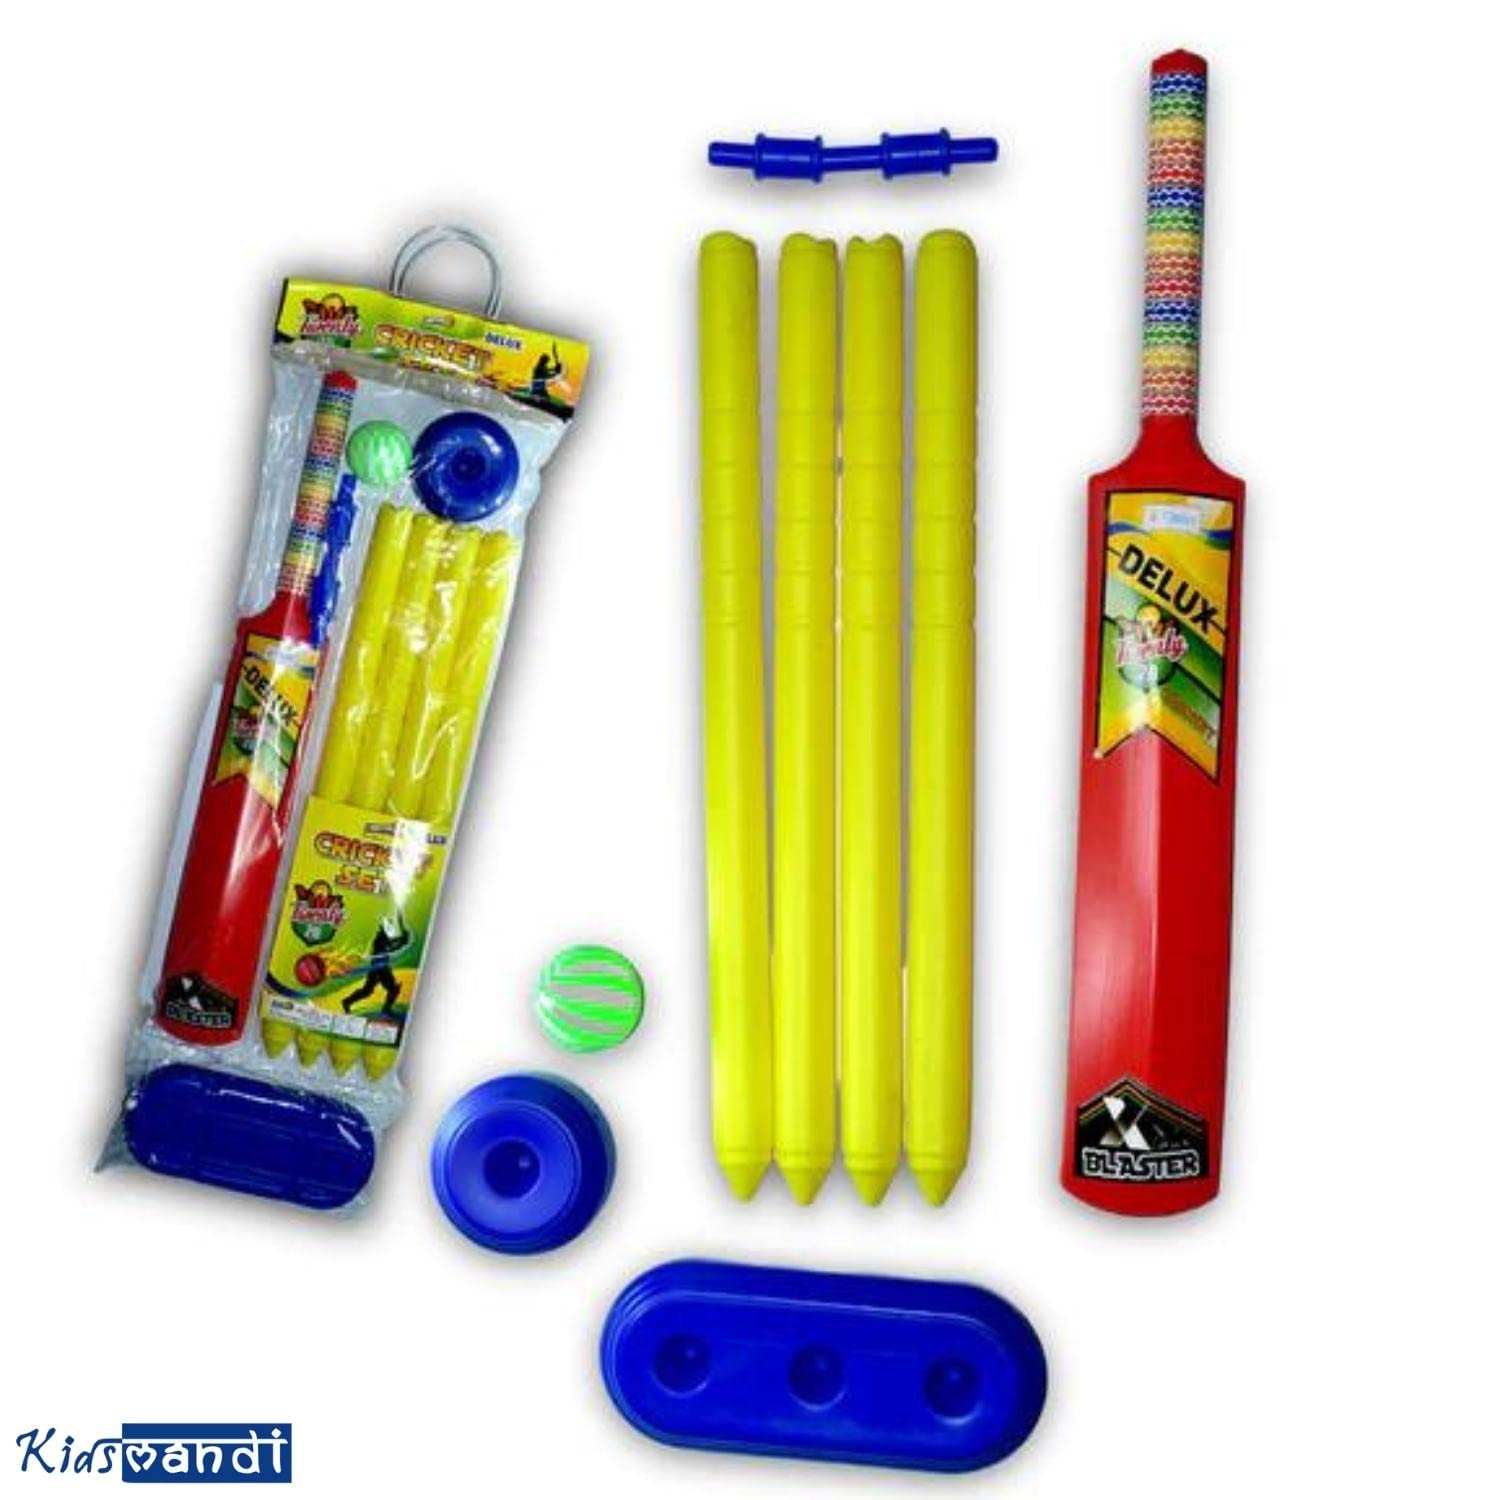 Kids Mandi plastic cricket bat set for parent-child sports game